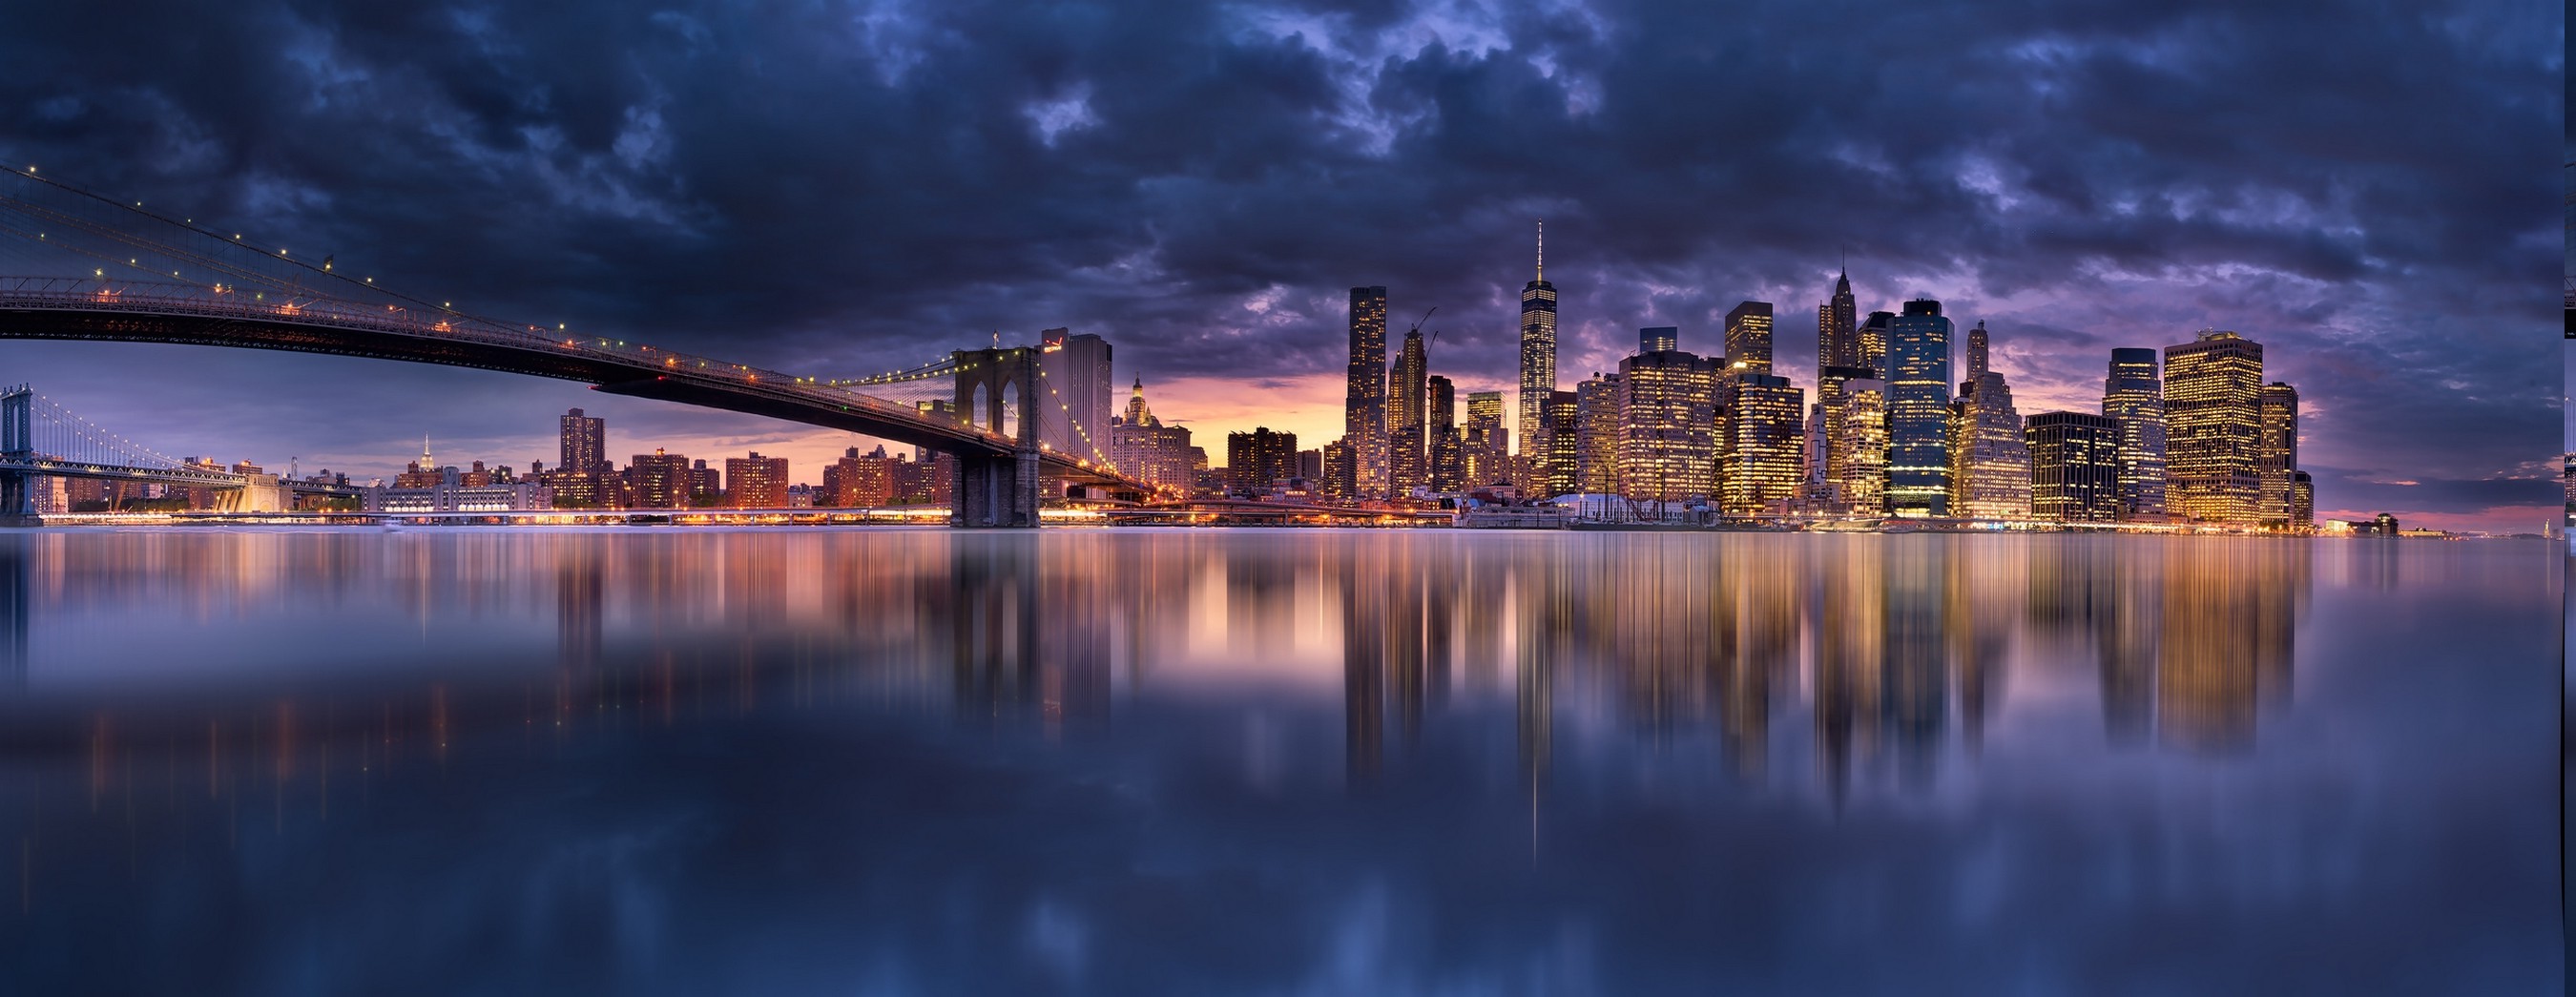 landscape, Cityscape, Skyscraper, Bridge, Lights, Clouds, Manhattan, New York City, Evening, Architecture, Water, Panoramas, Modern, Urban, Building, Reflection, Sea Wallpaper